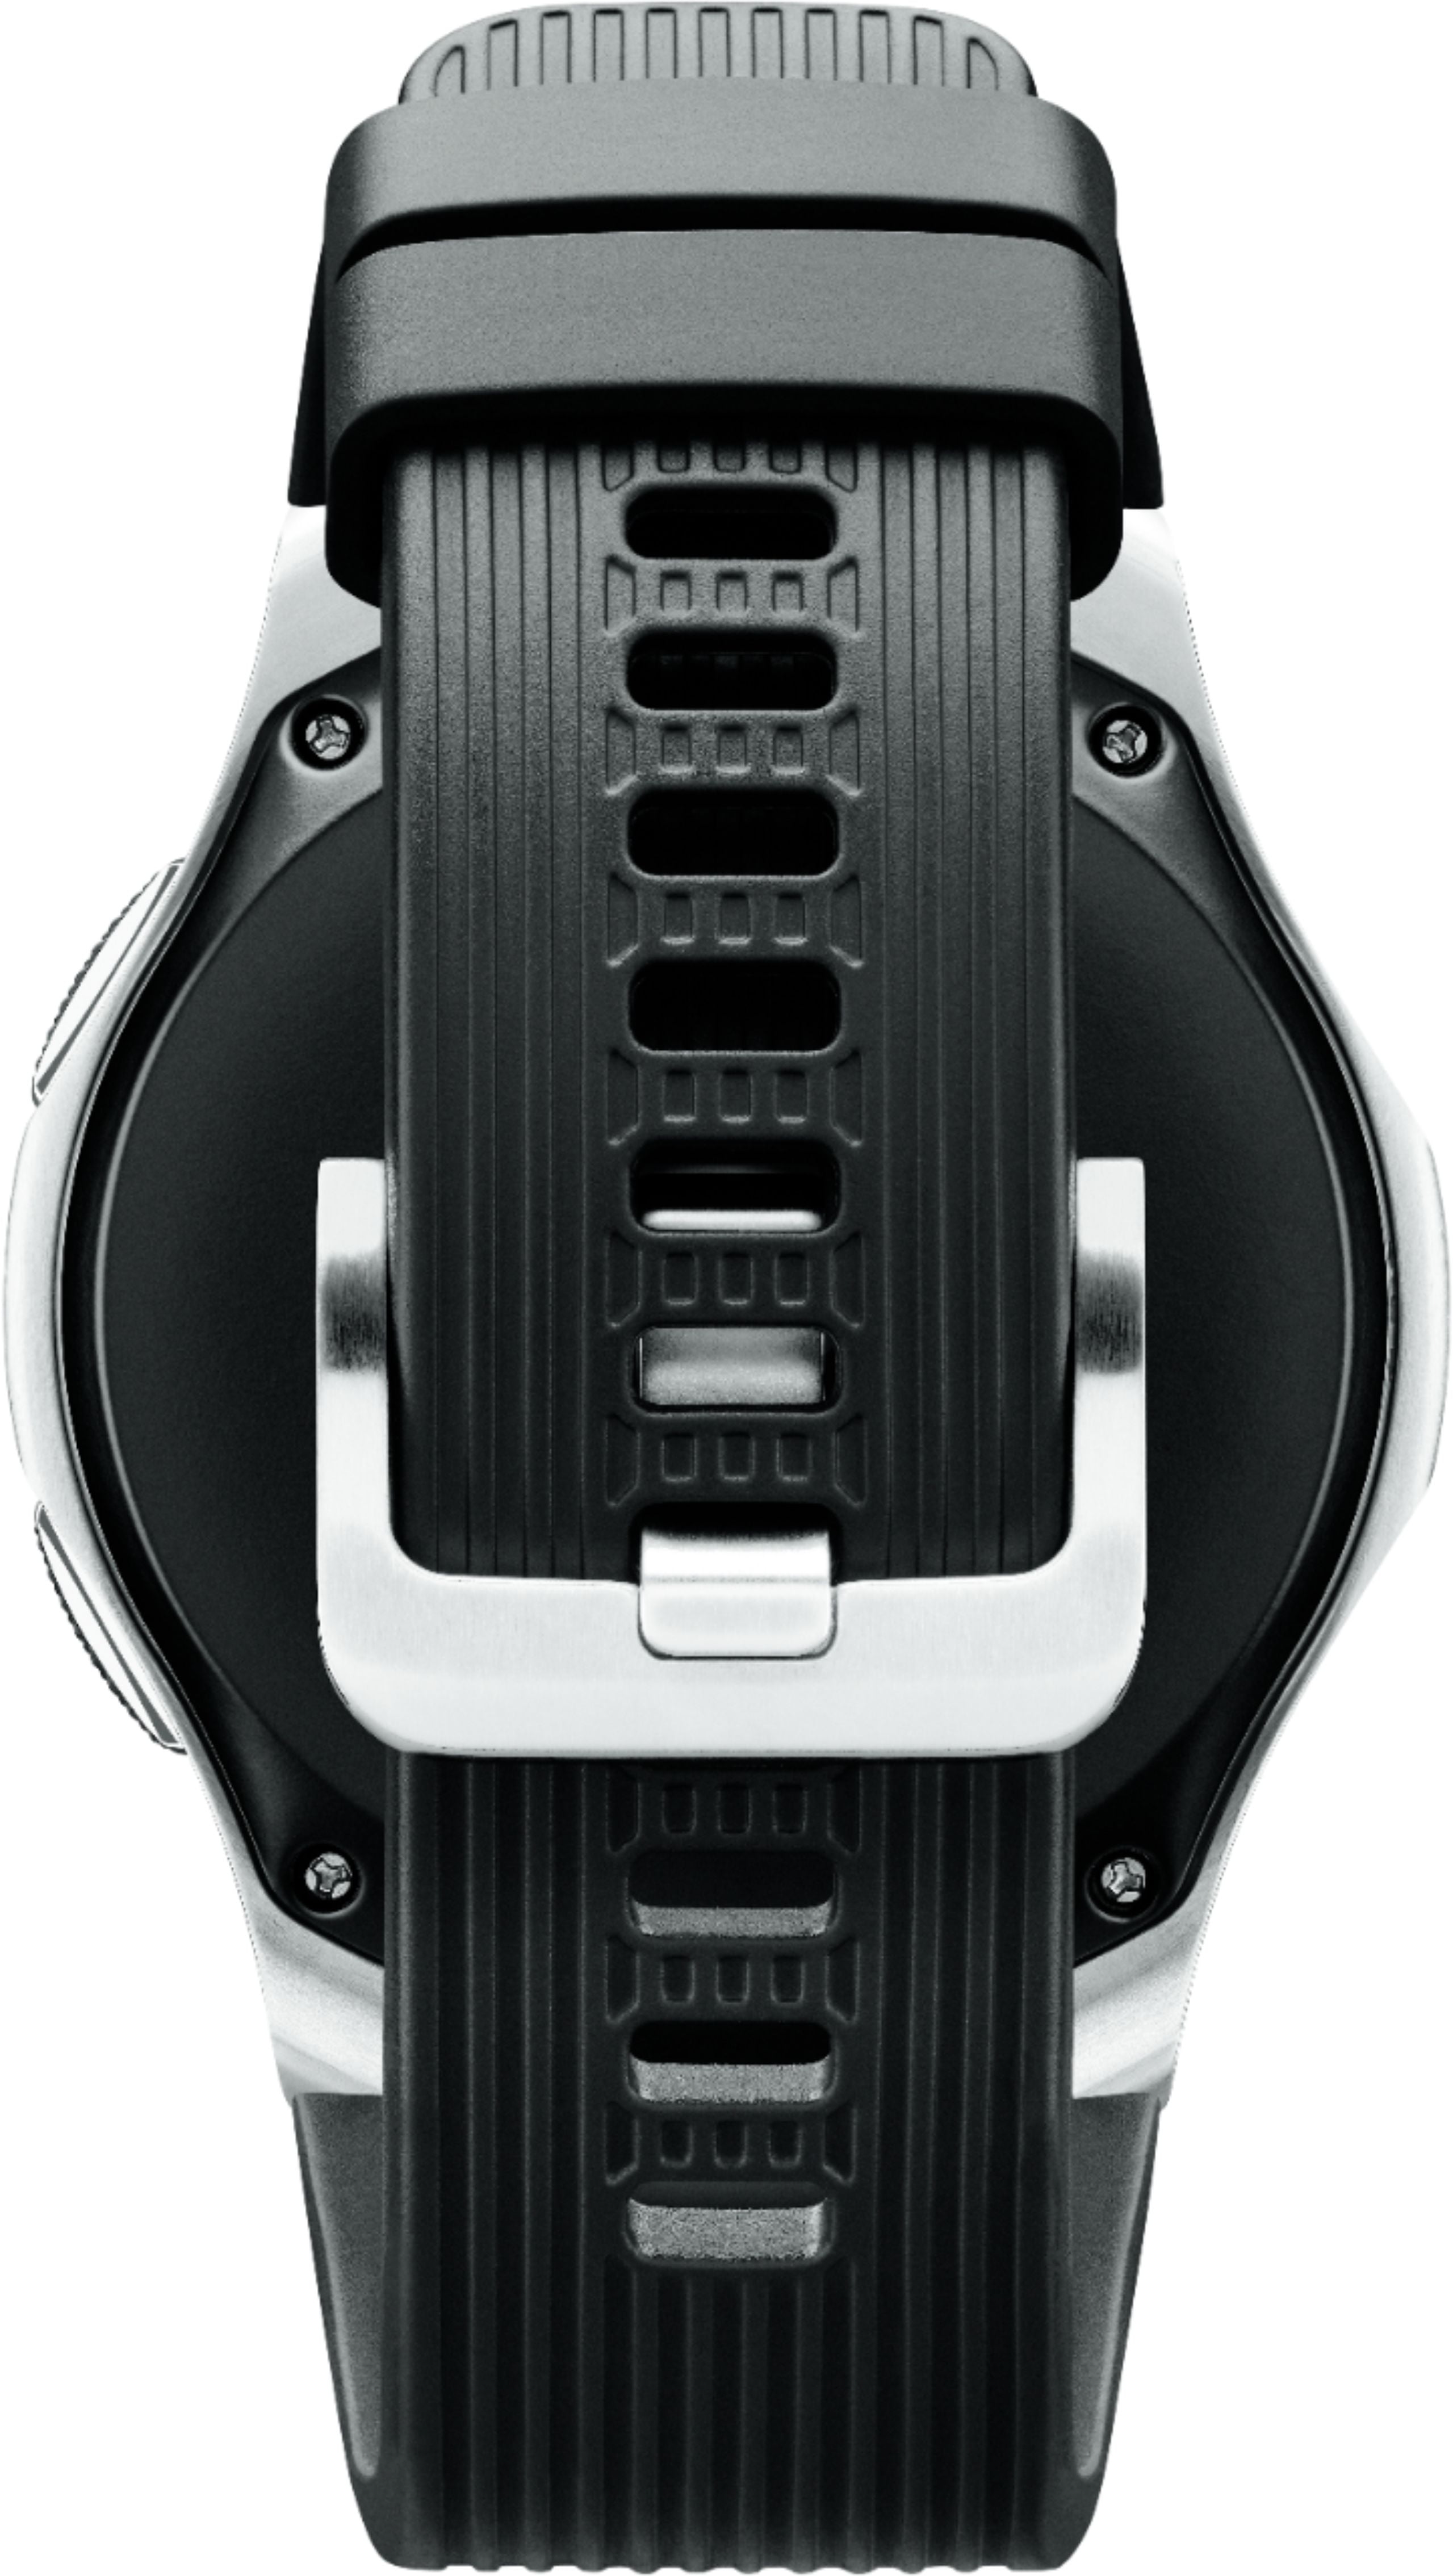 SAMSUNG Galaxy Watch (46mm, GPS, Bluetooth) – Silver/Black (US Version)